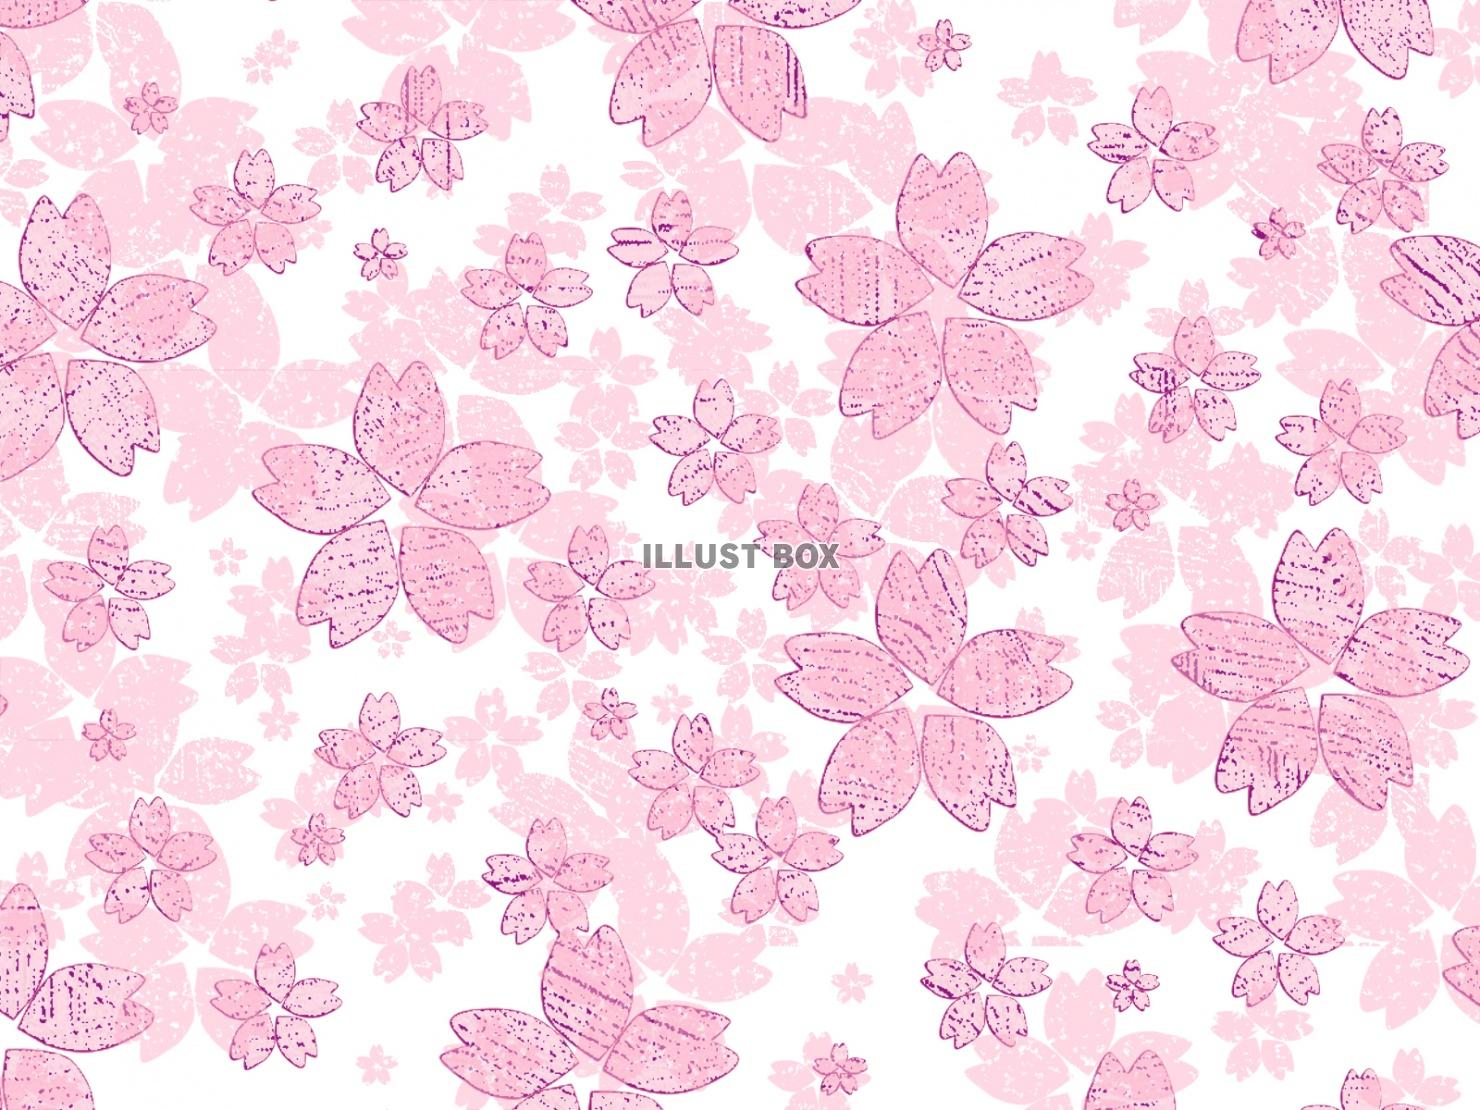 JPEG：クレヨン素材で作成した桜の背景素材